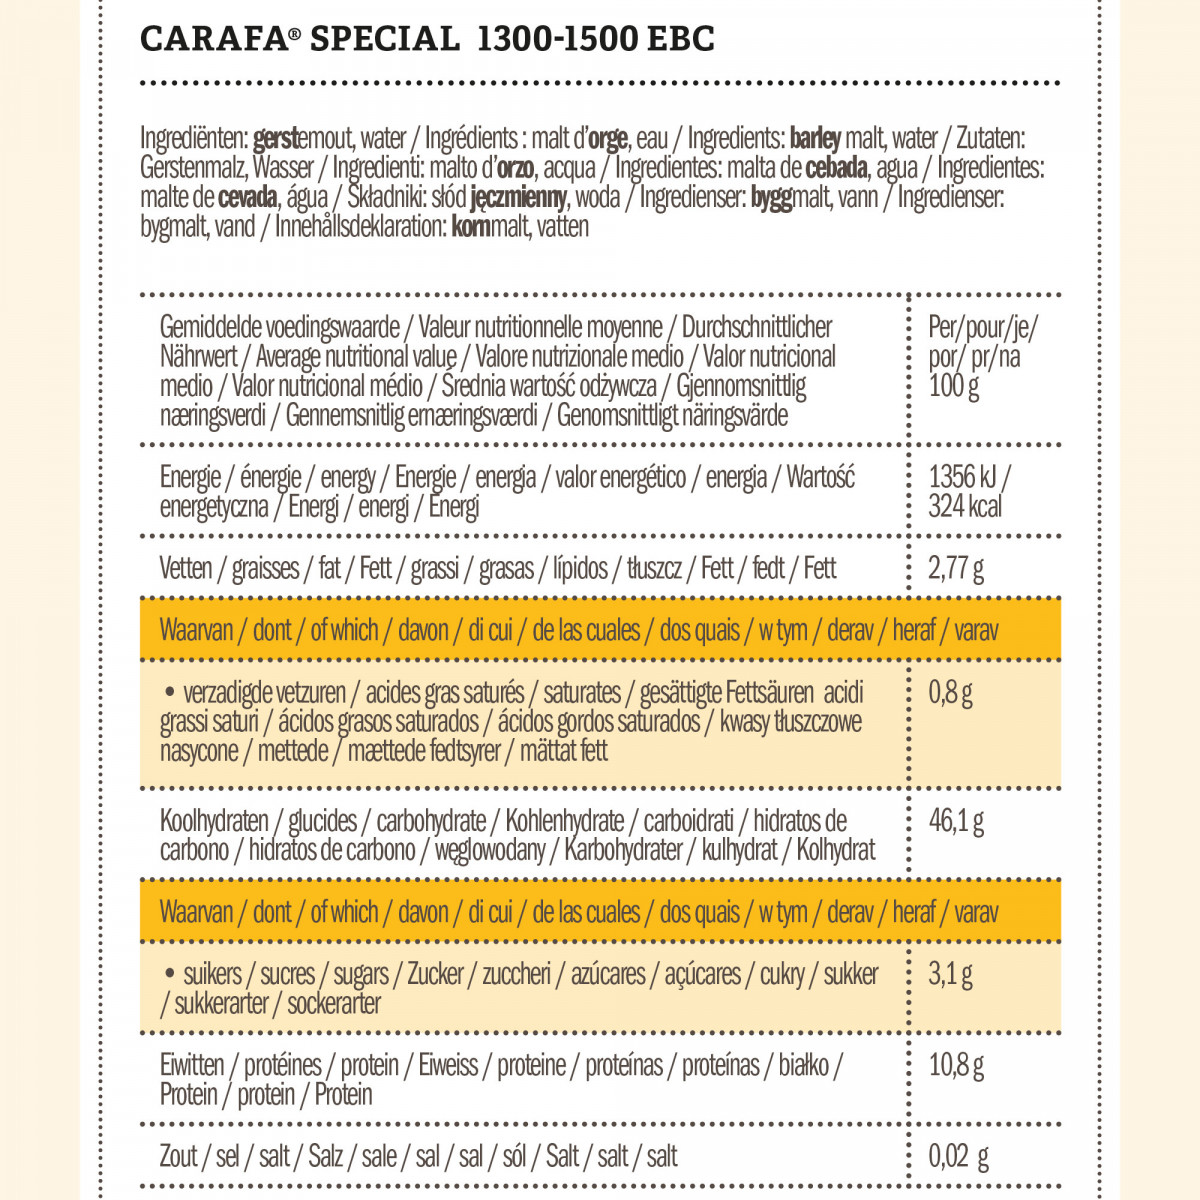 Weyermann® Carafa® Special type 3 1300-1500 EBC 1 kg